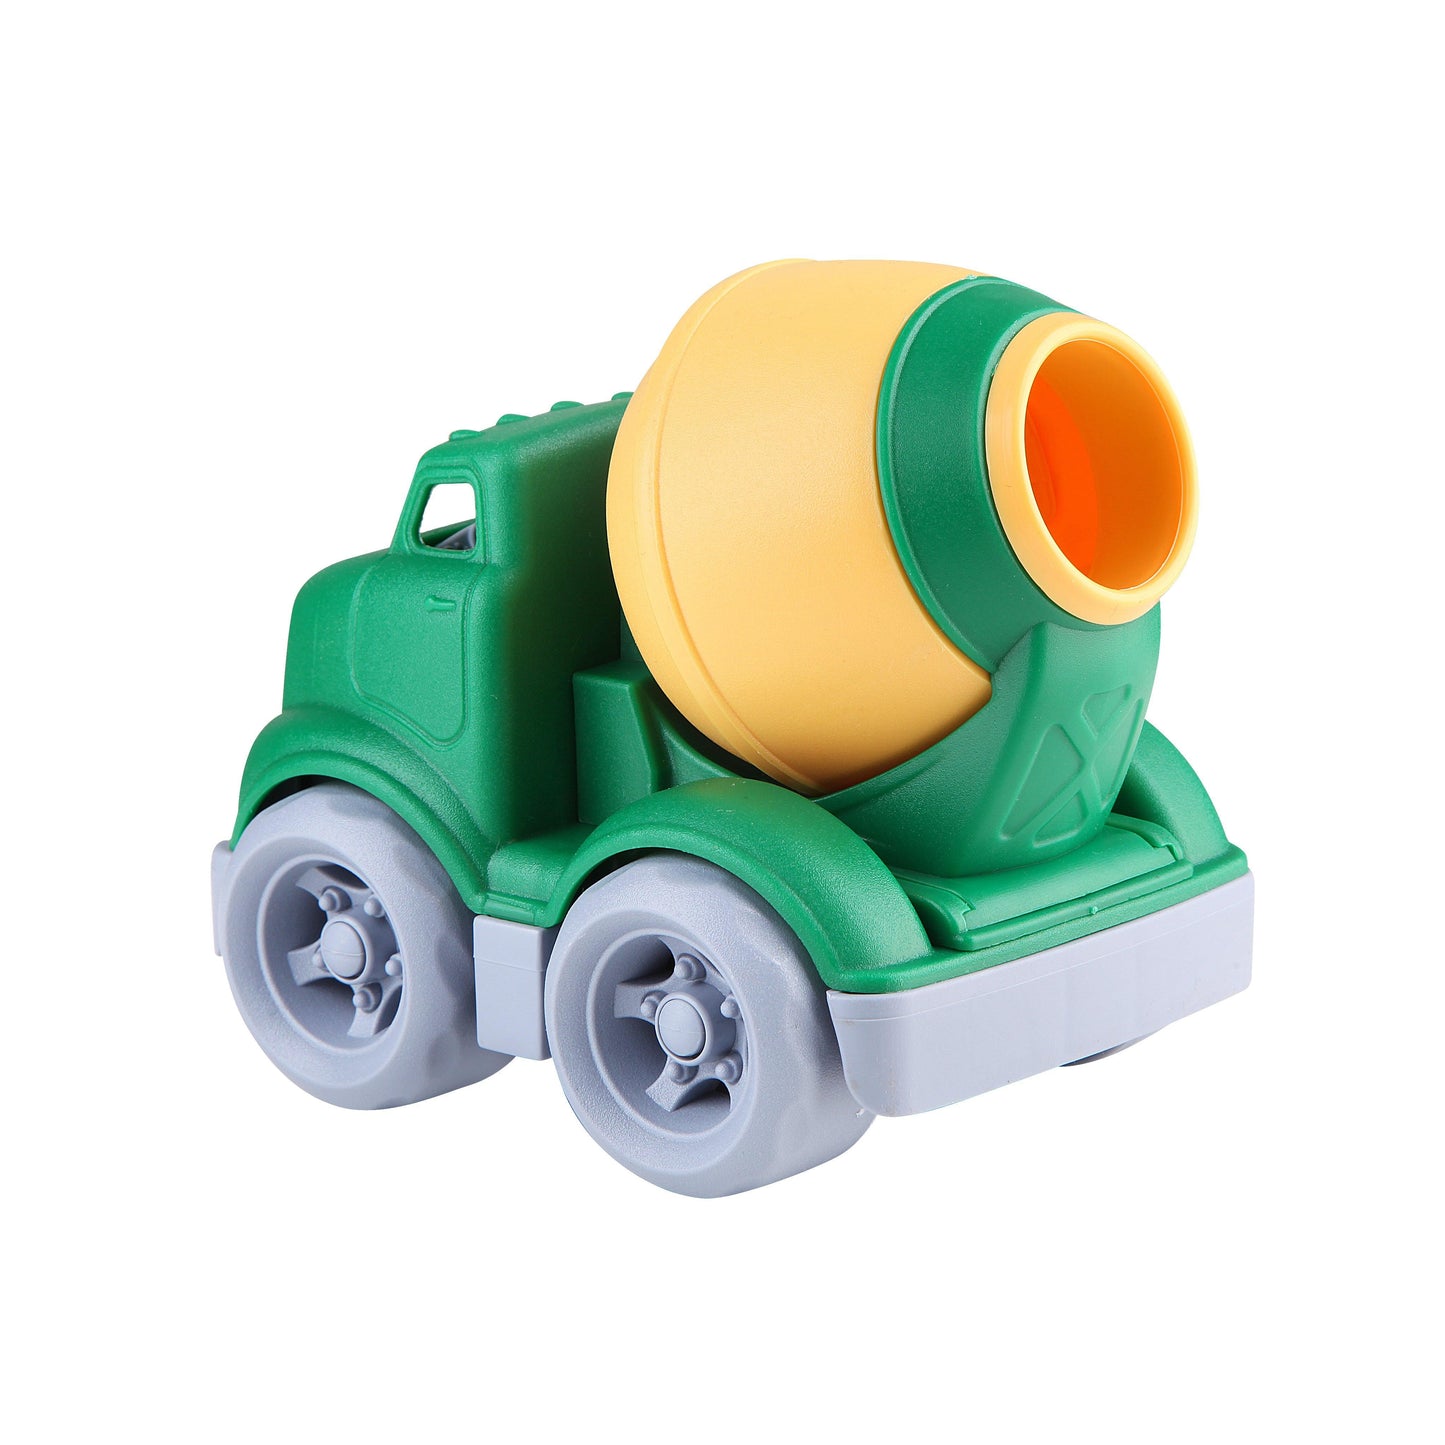 Green Mini Mixer Truck-Car, catveh, Communication, Construction, Coordination, Green, Imagination, Language, Mixer, Motor, Pretend, Skills, Toy, Truck, Wheels-Let's Be Child-[Too Twee]-[Tootwee]-[baby]-[newborn]-[clothes]-[essentials]-[toys]-[Lebanon]